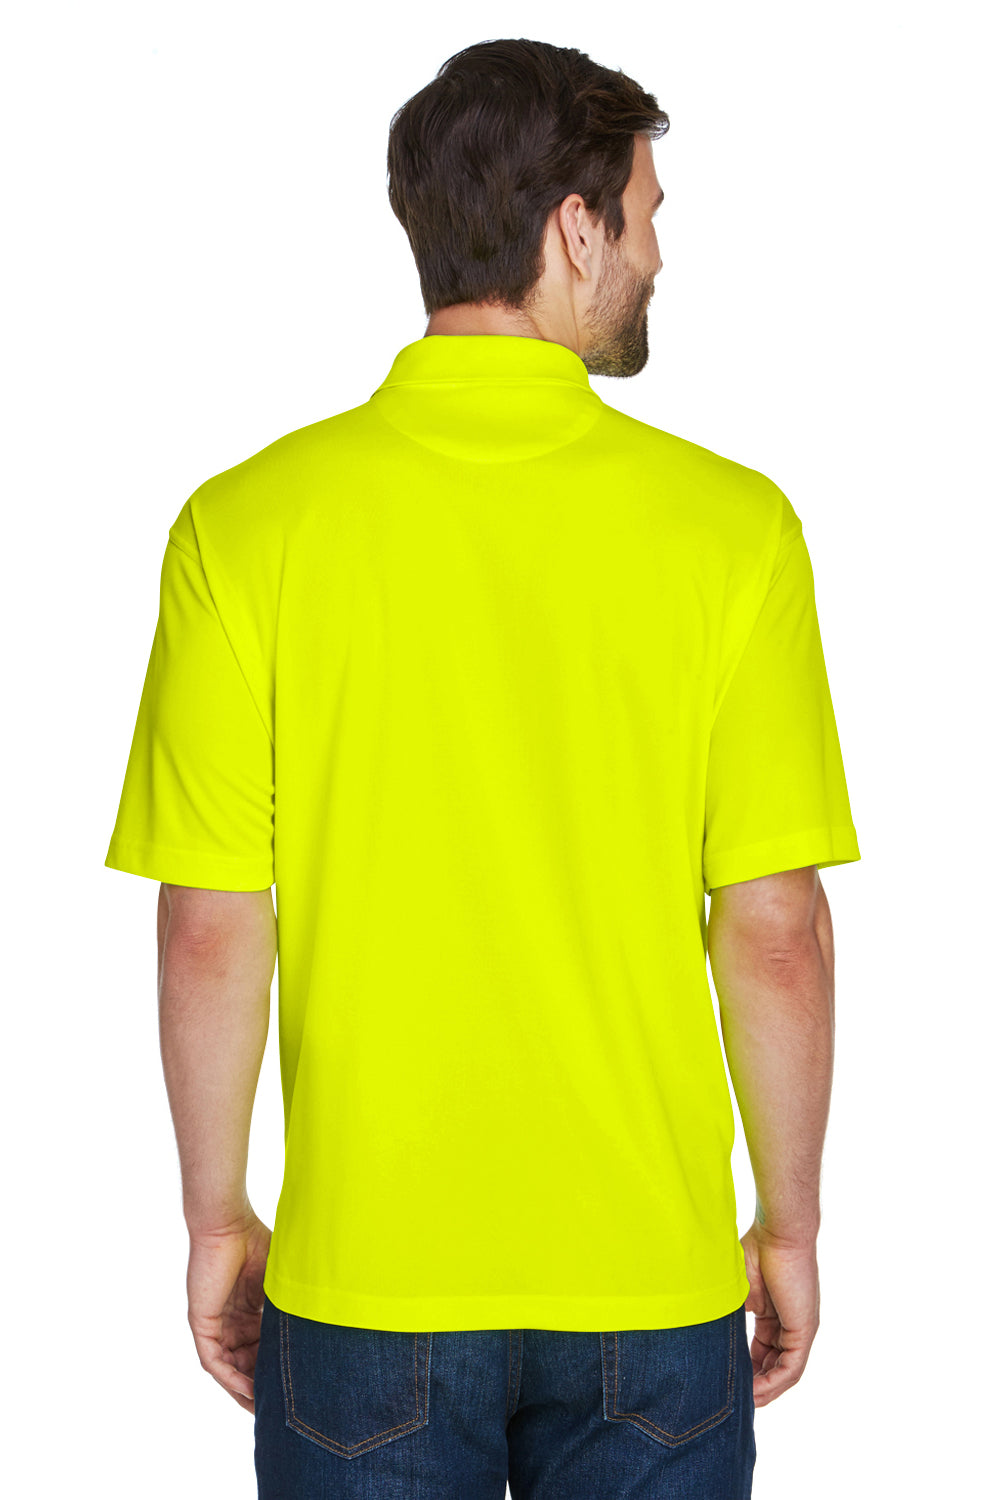 UltraClub 8210 Mens Cool & Dry Moisture Wicking Short Sleeve Polo Shirt Bright Yellow Back